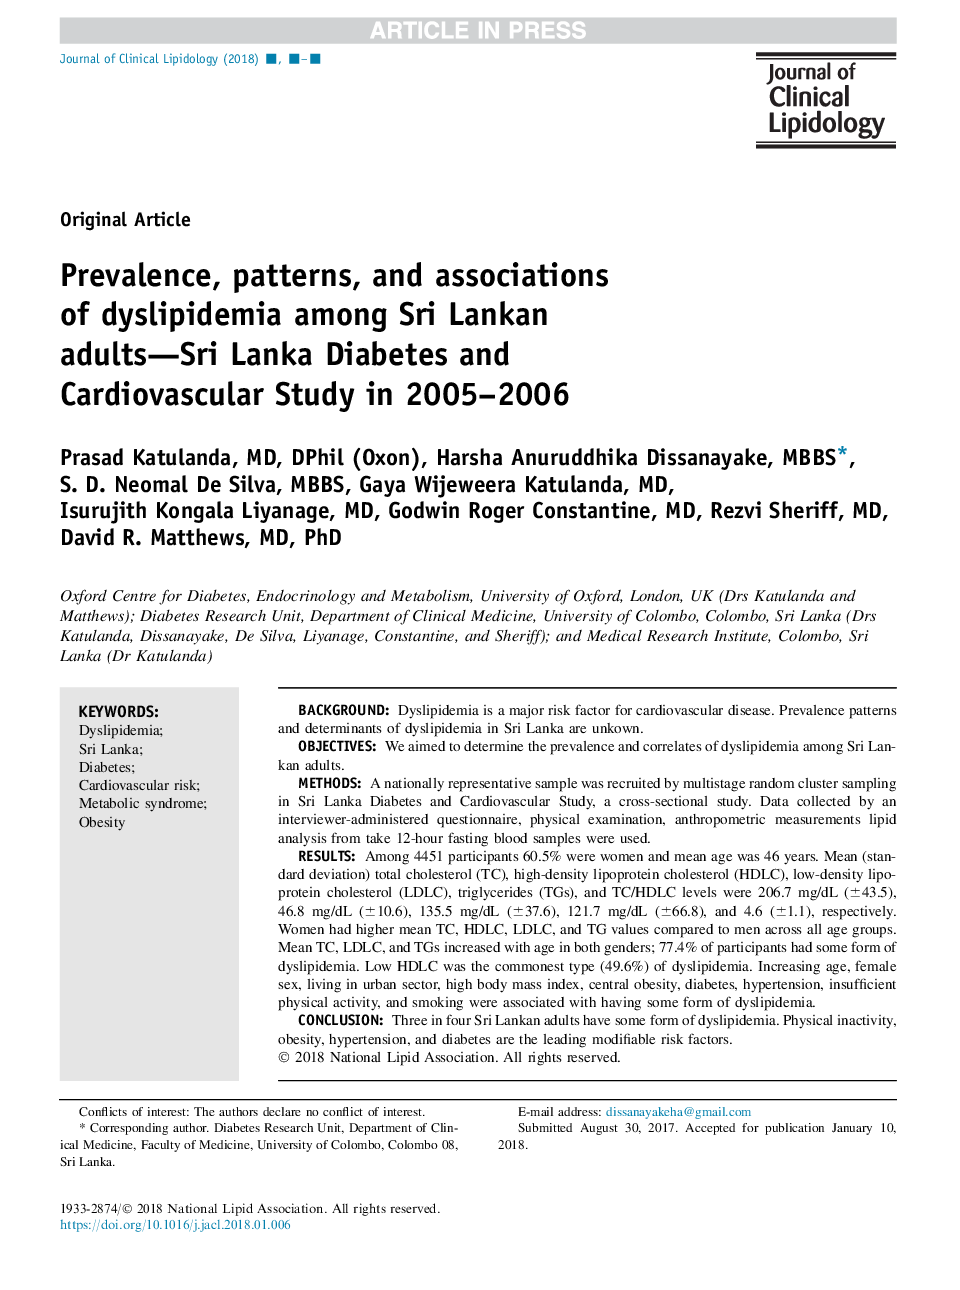 Prevalence, patterns, and associations of dyslipidemia among Sri Lankan adults-Sri Lanka Diabetes and Cardiovascular Study in 2005-2006